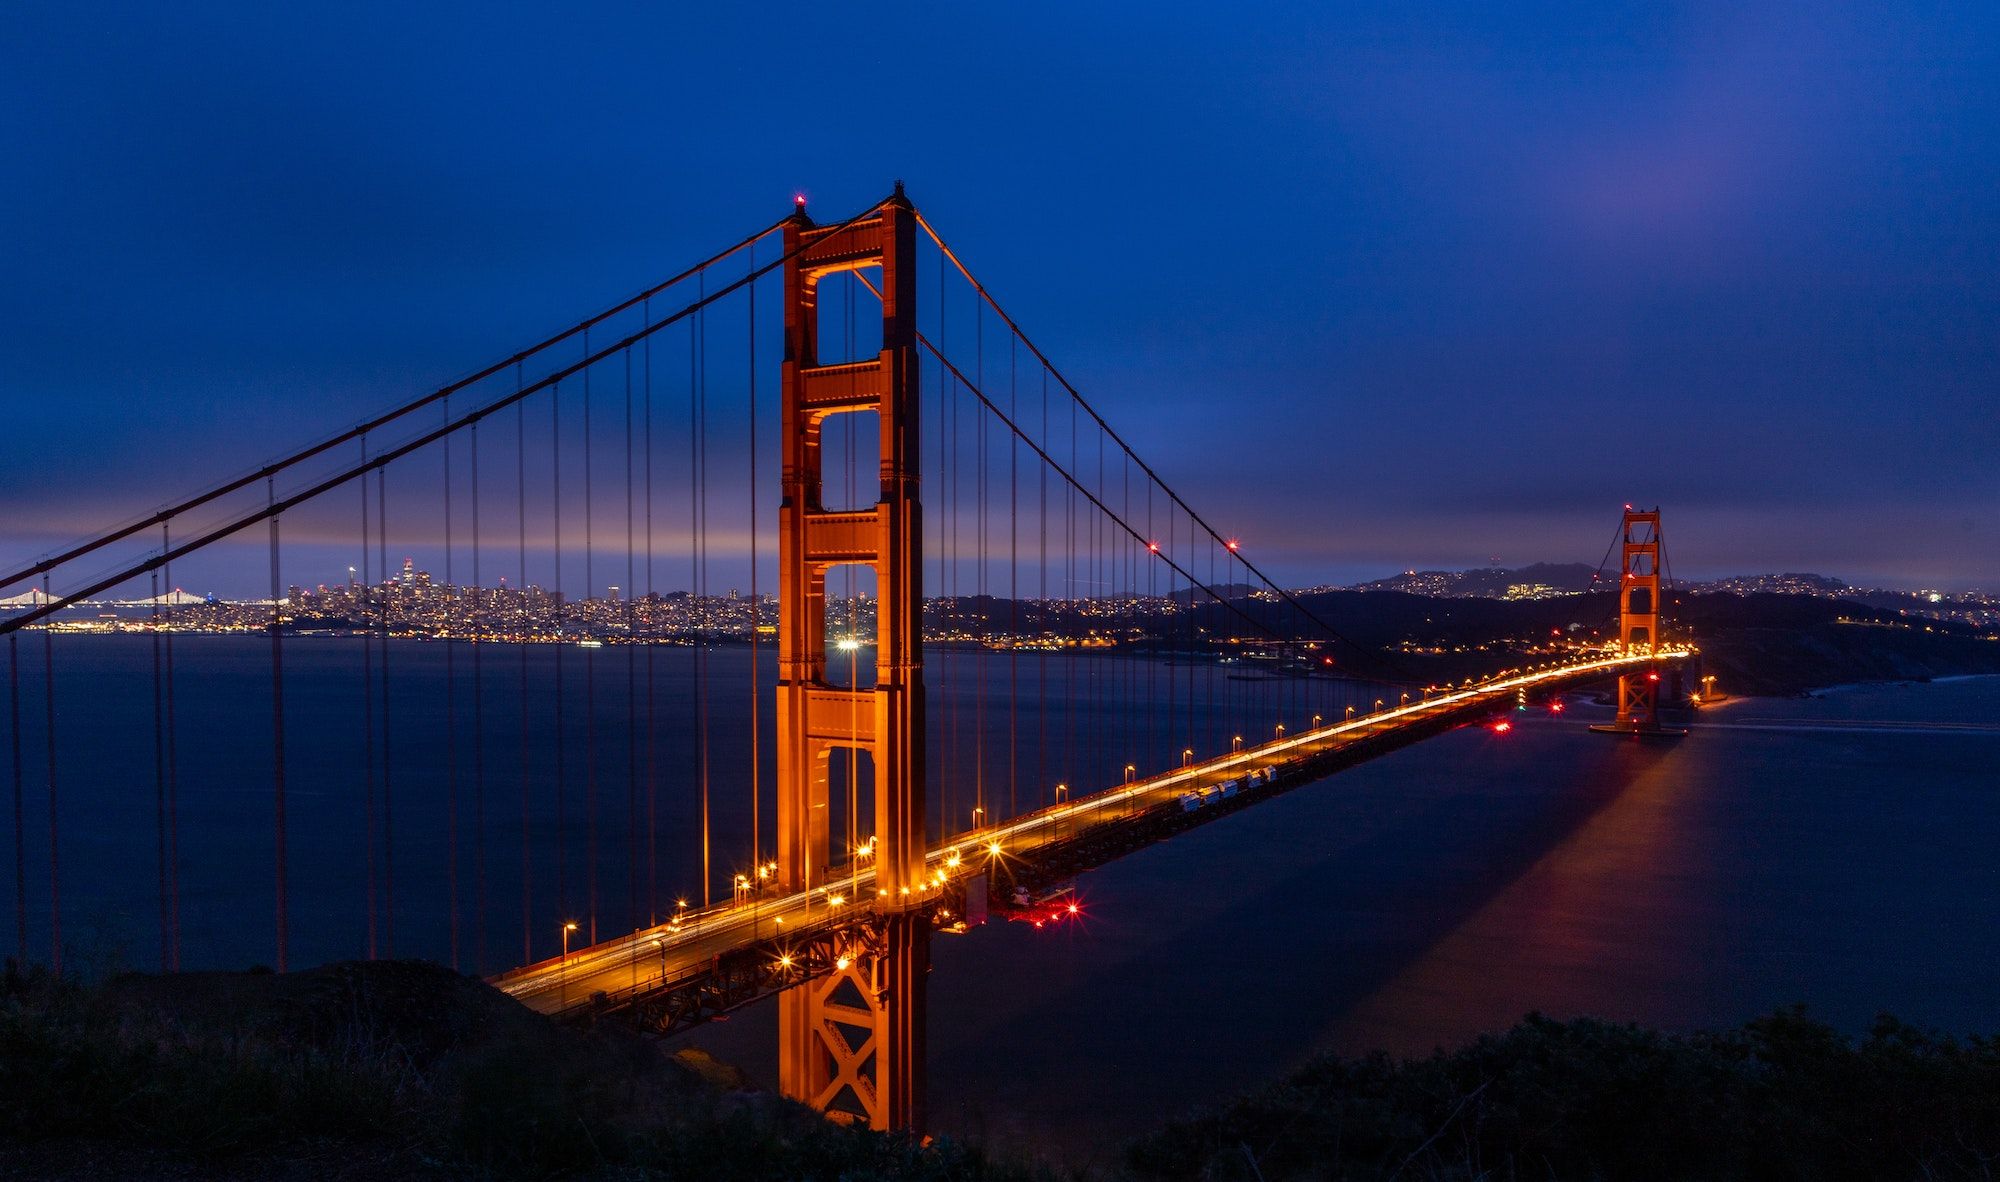 Background image of Golden Gate Bridge during nighttime